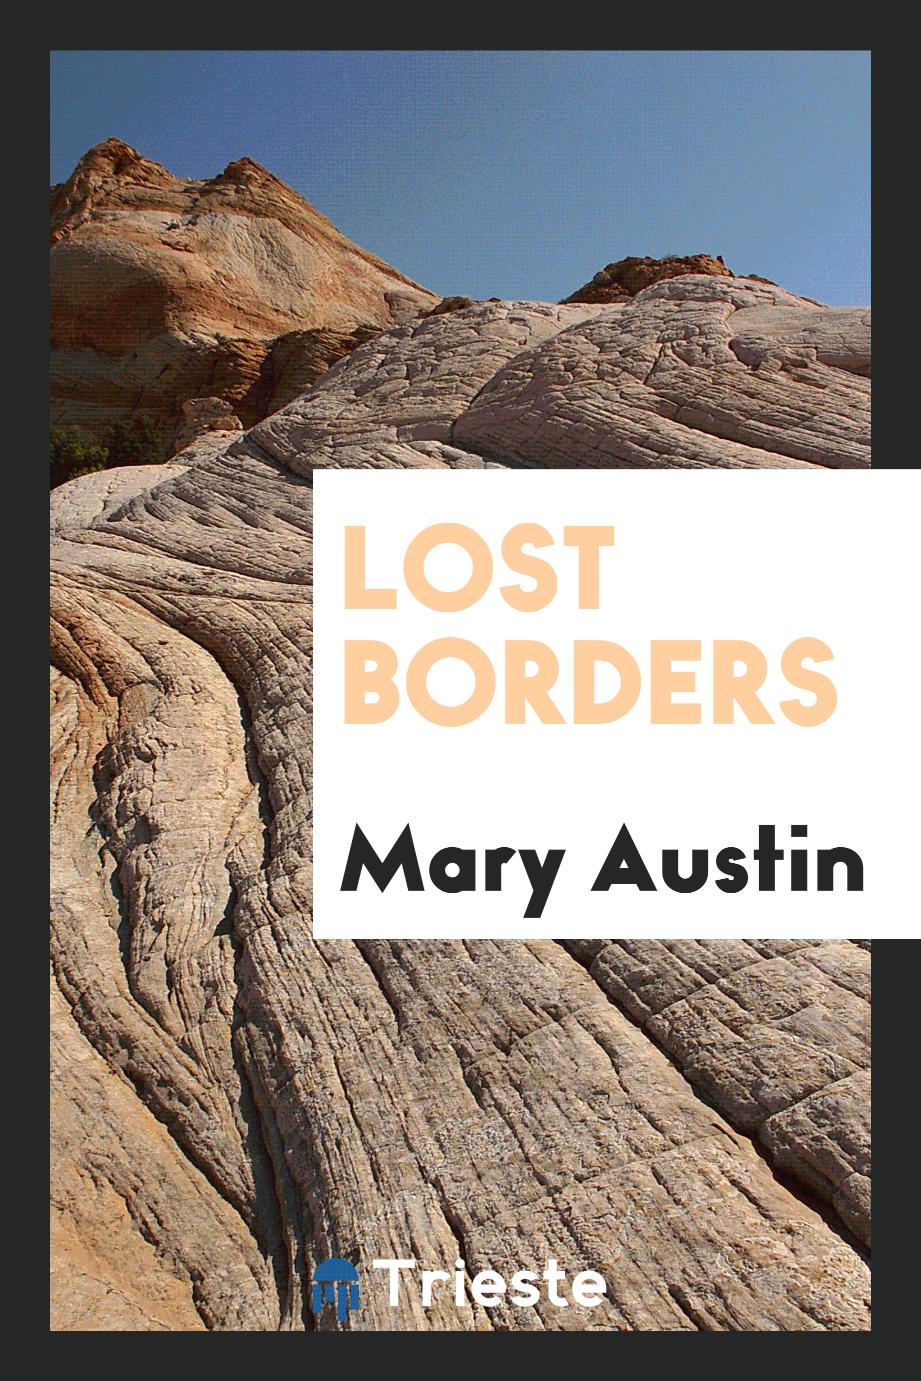 Lost borders